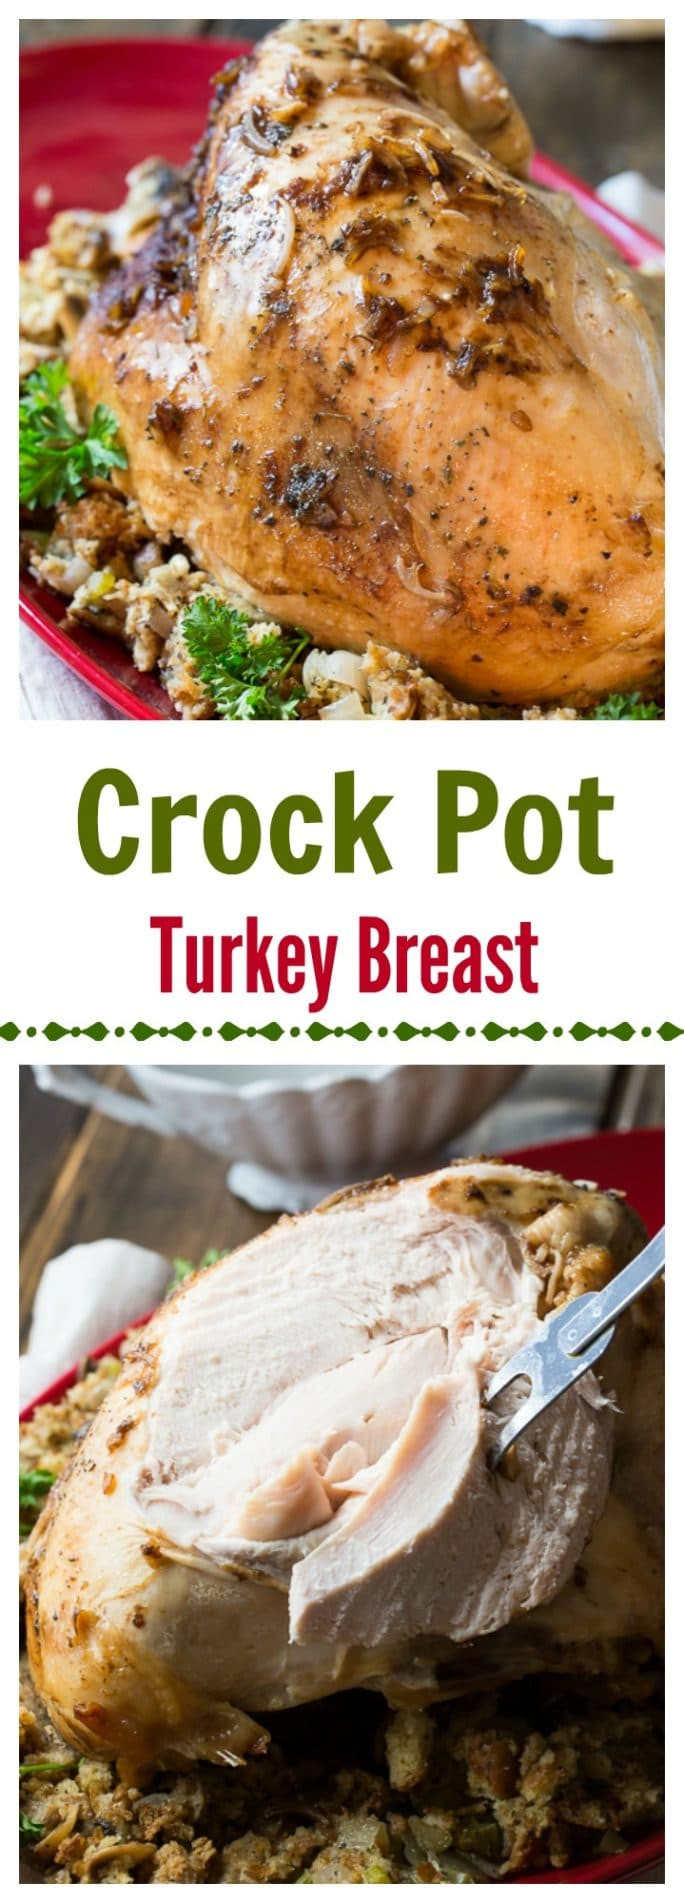 Crock Pot Thanksgiving Turkey
 Crock Pot Turkey Breast Spicy Southern Kitchen